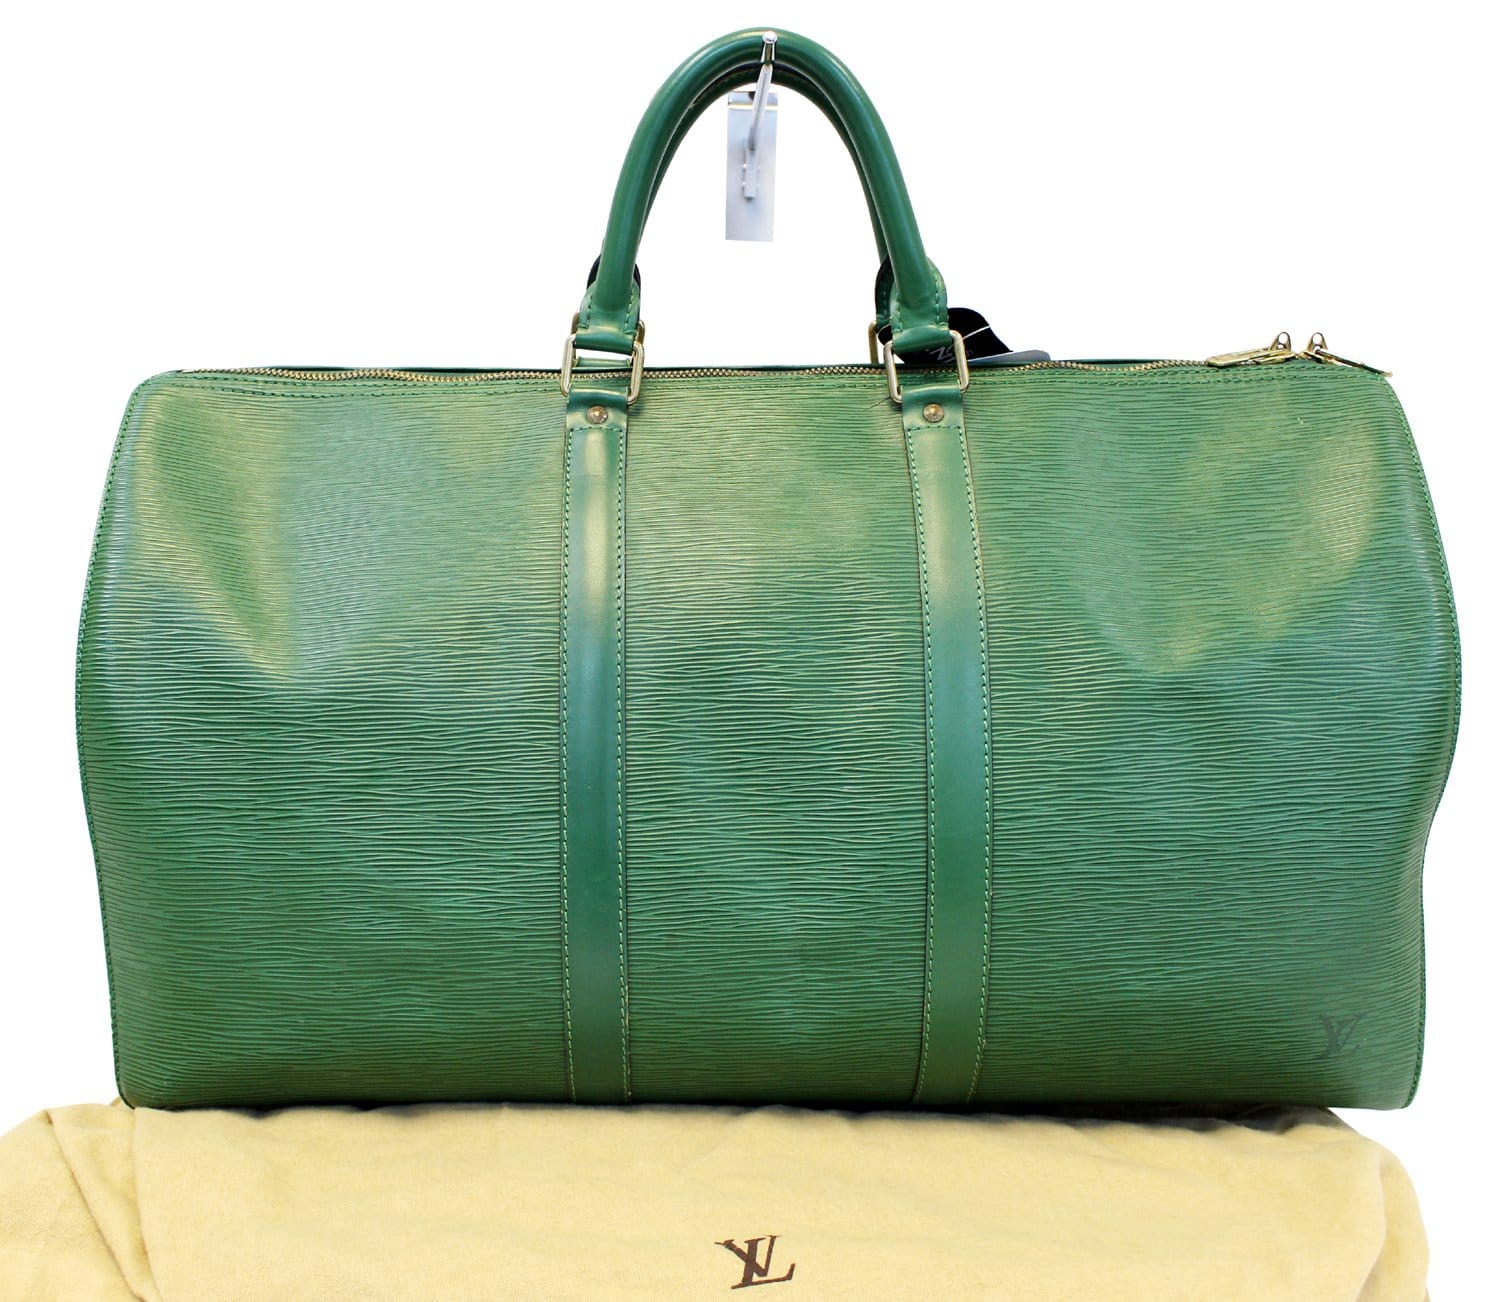 Sold at Auction: LOUIS VUITTON 'KEEPALL 50' BEIGE EPI DUFFLE BAG